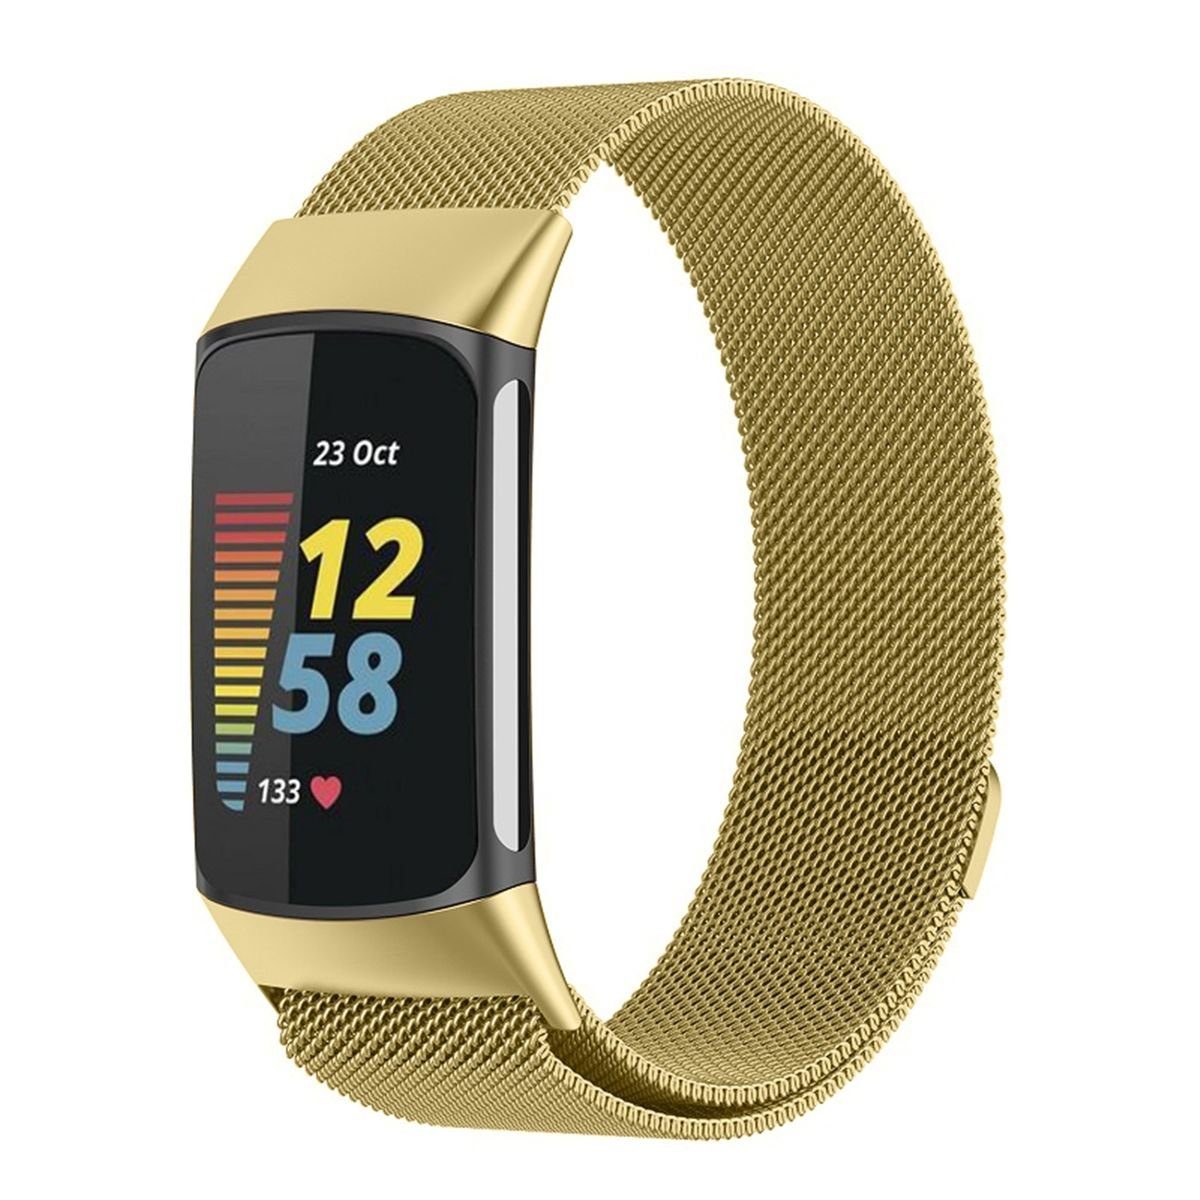 Fitbit Armbanduhren online kaufen | OTTO